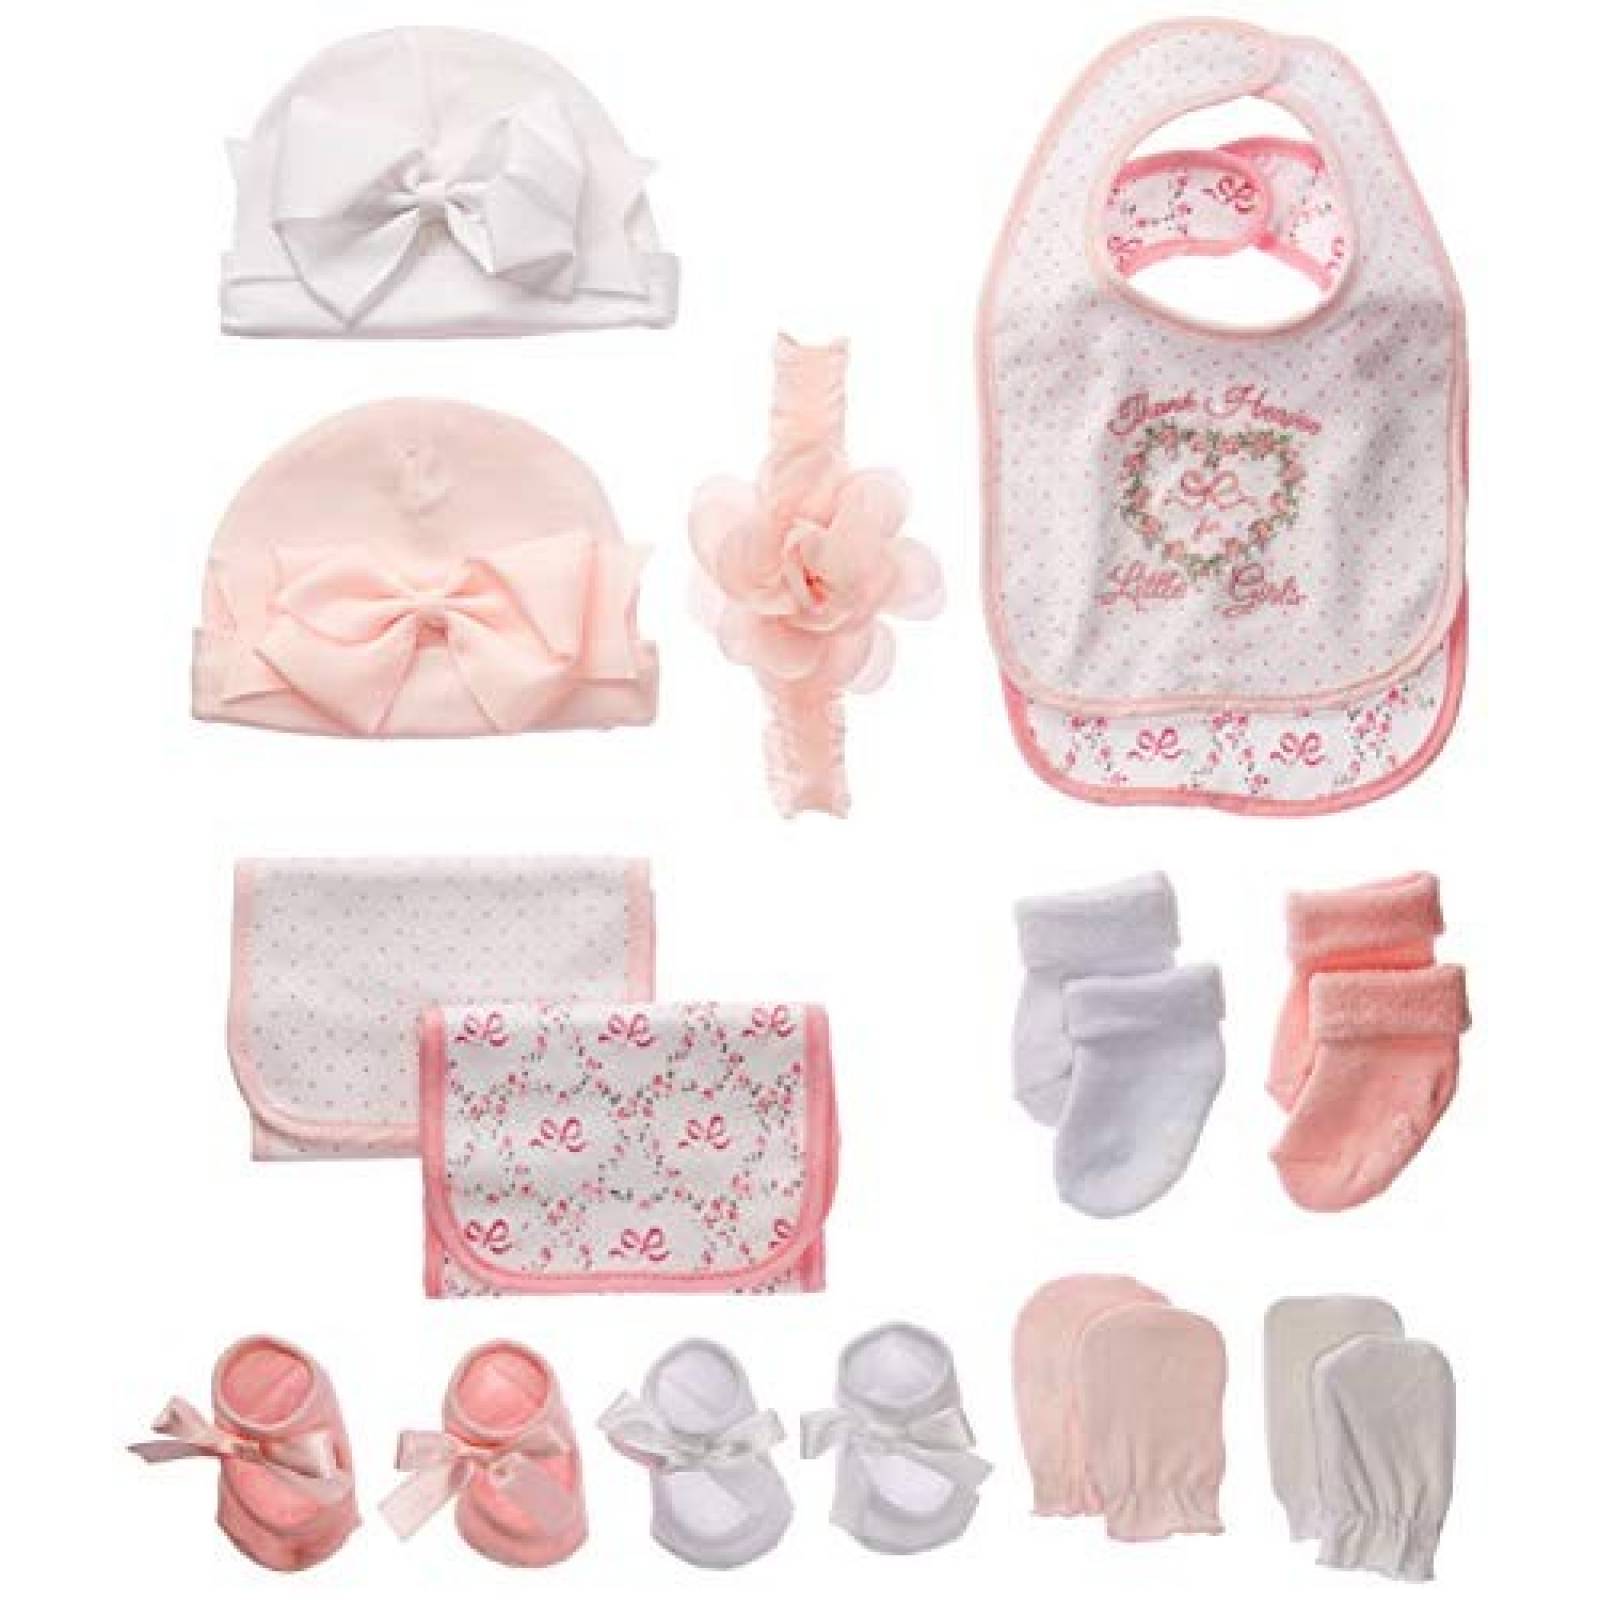 Kit de regalos para recién nacido Little Me 0-12 meses